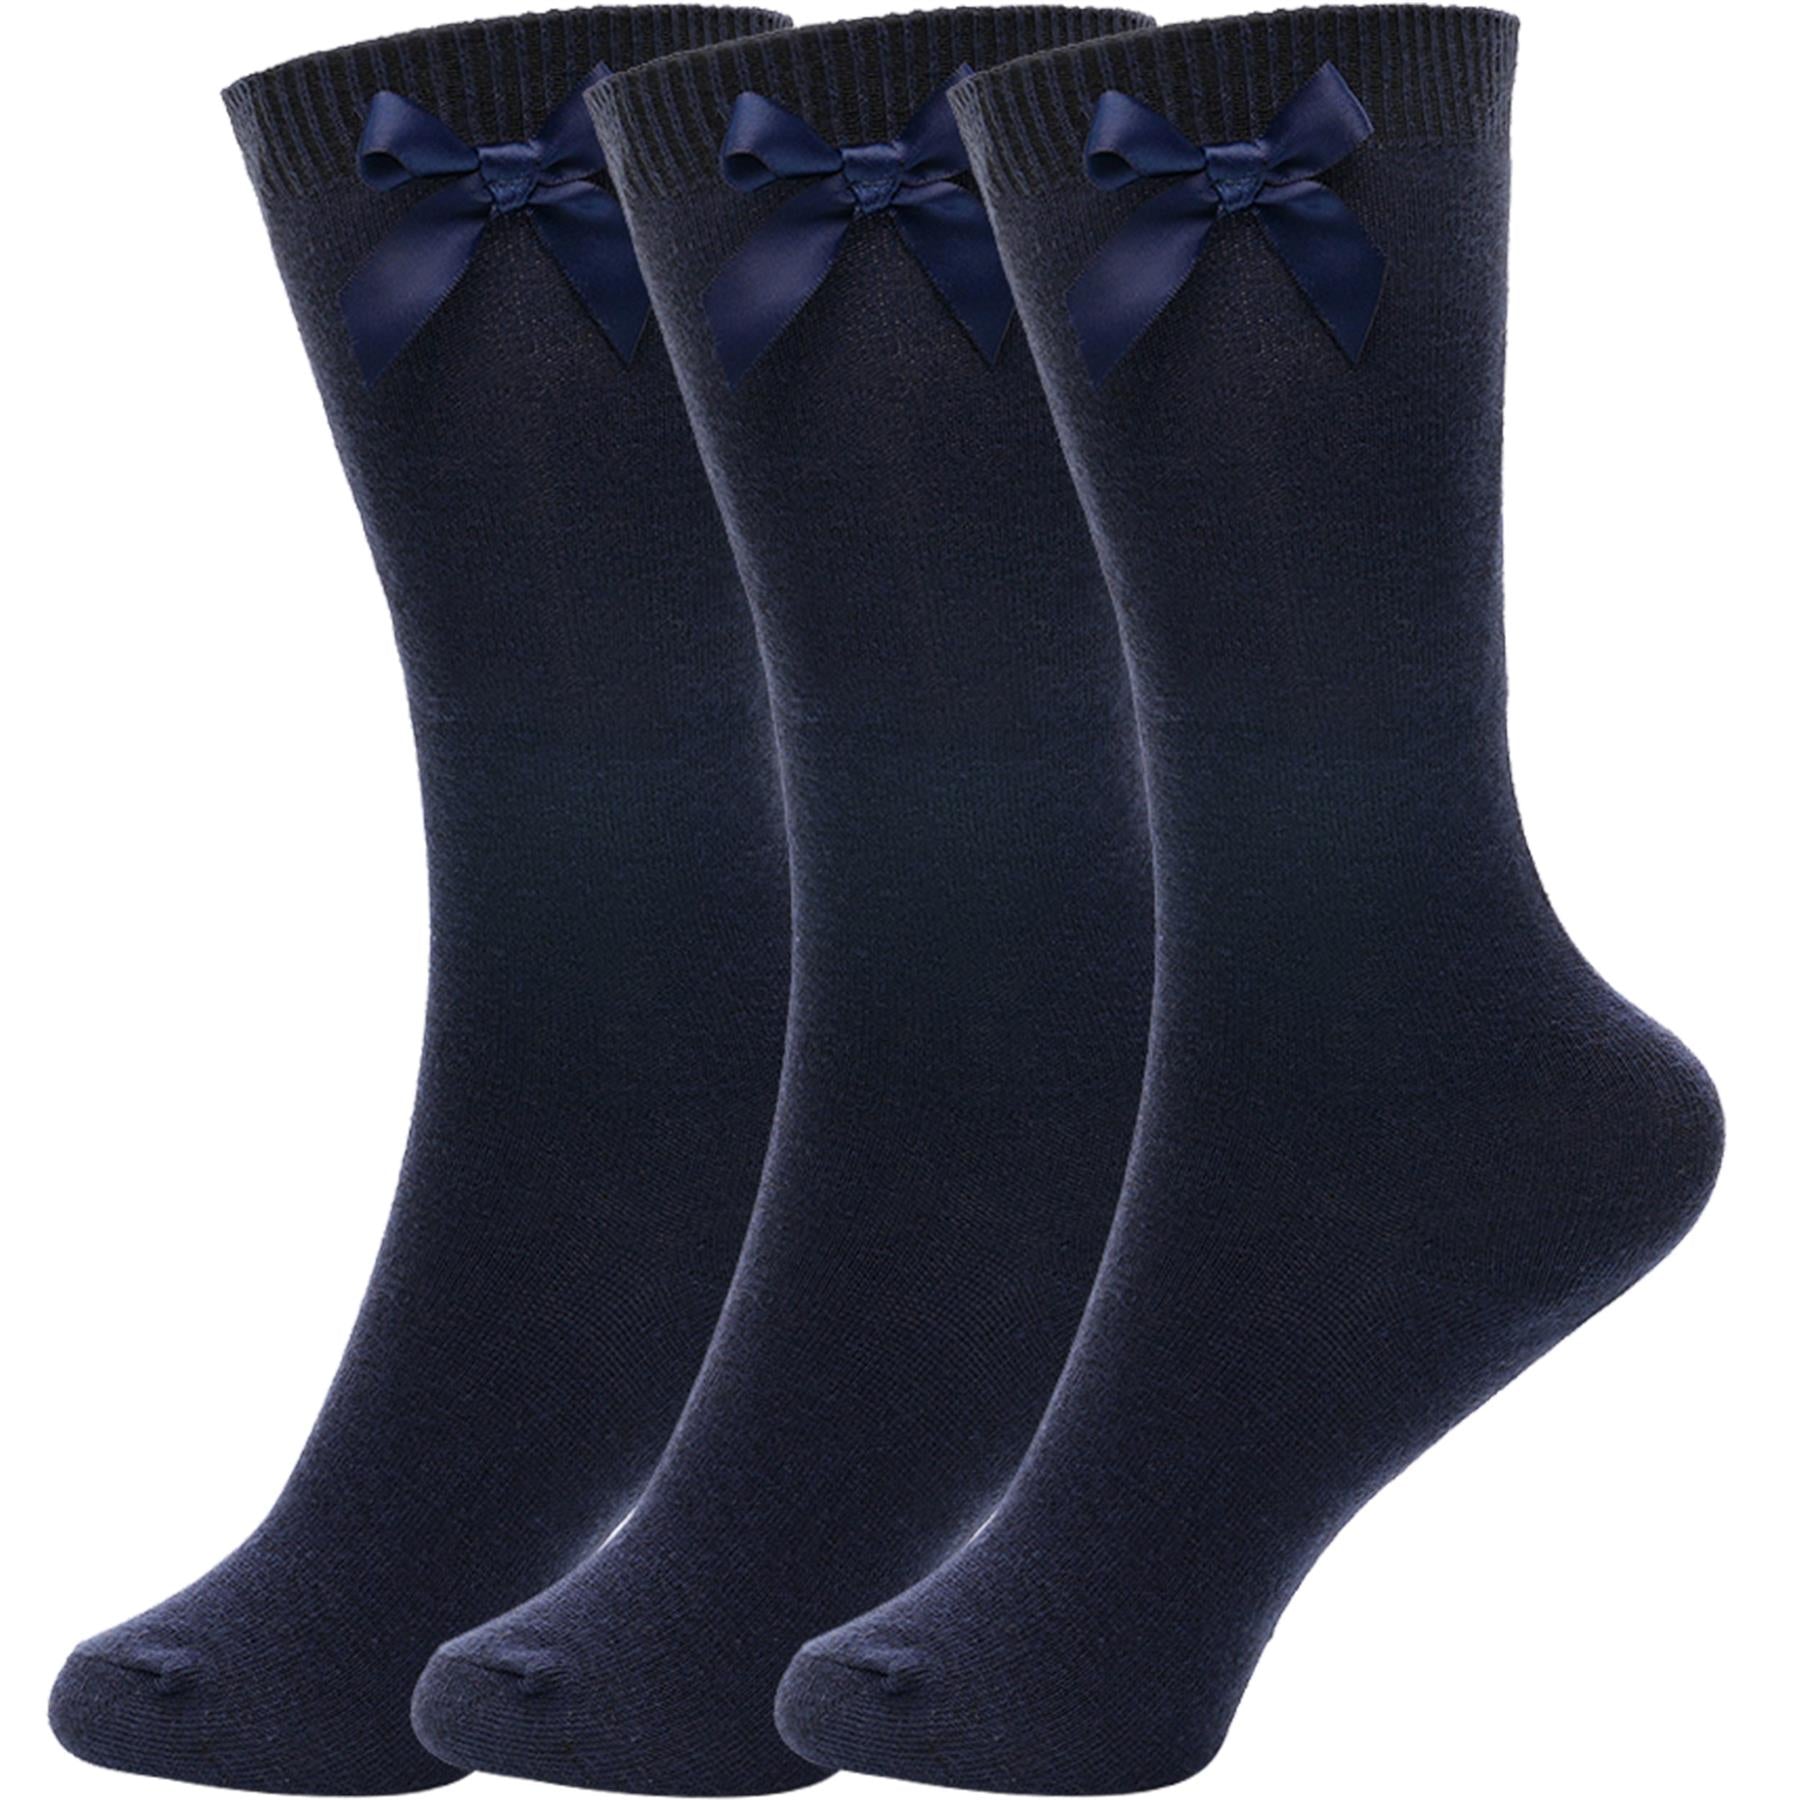 Kids Girls Plain Knee High Socks With Ribbon Bow Pack of 3 School Cotton Socks